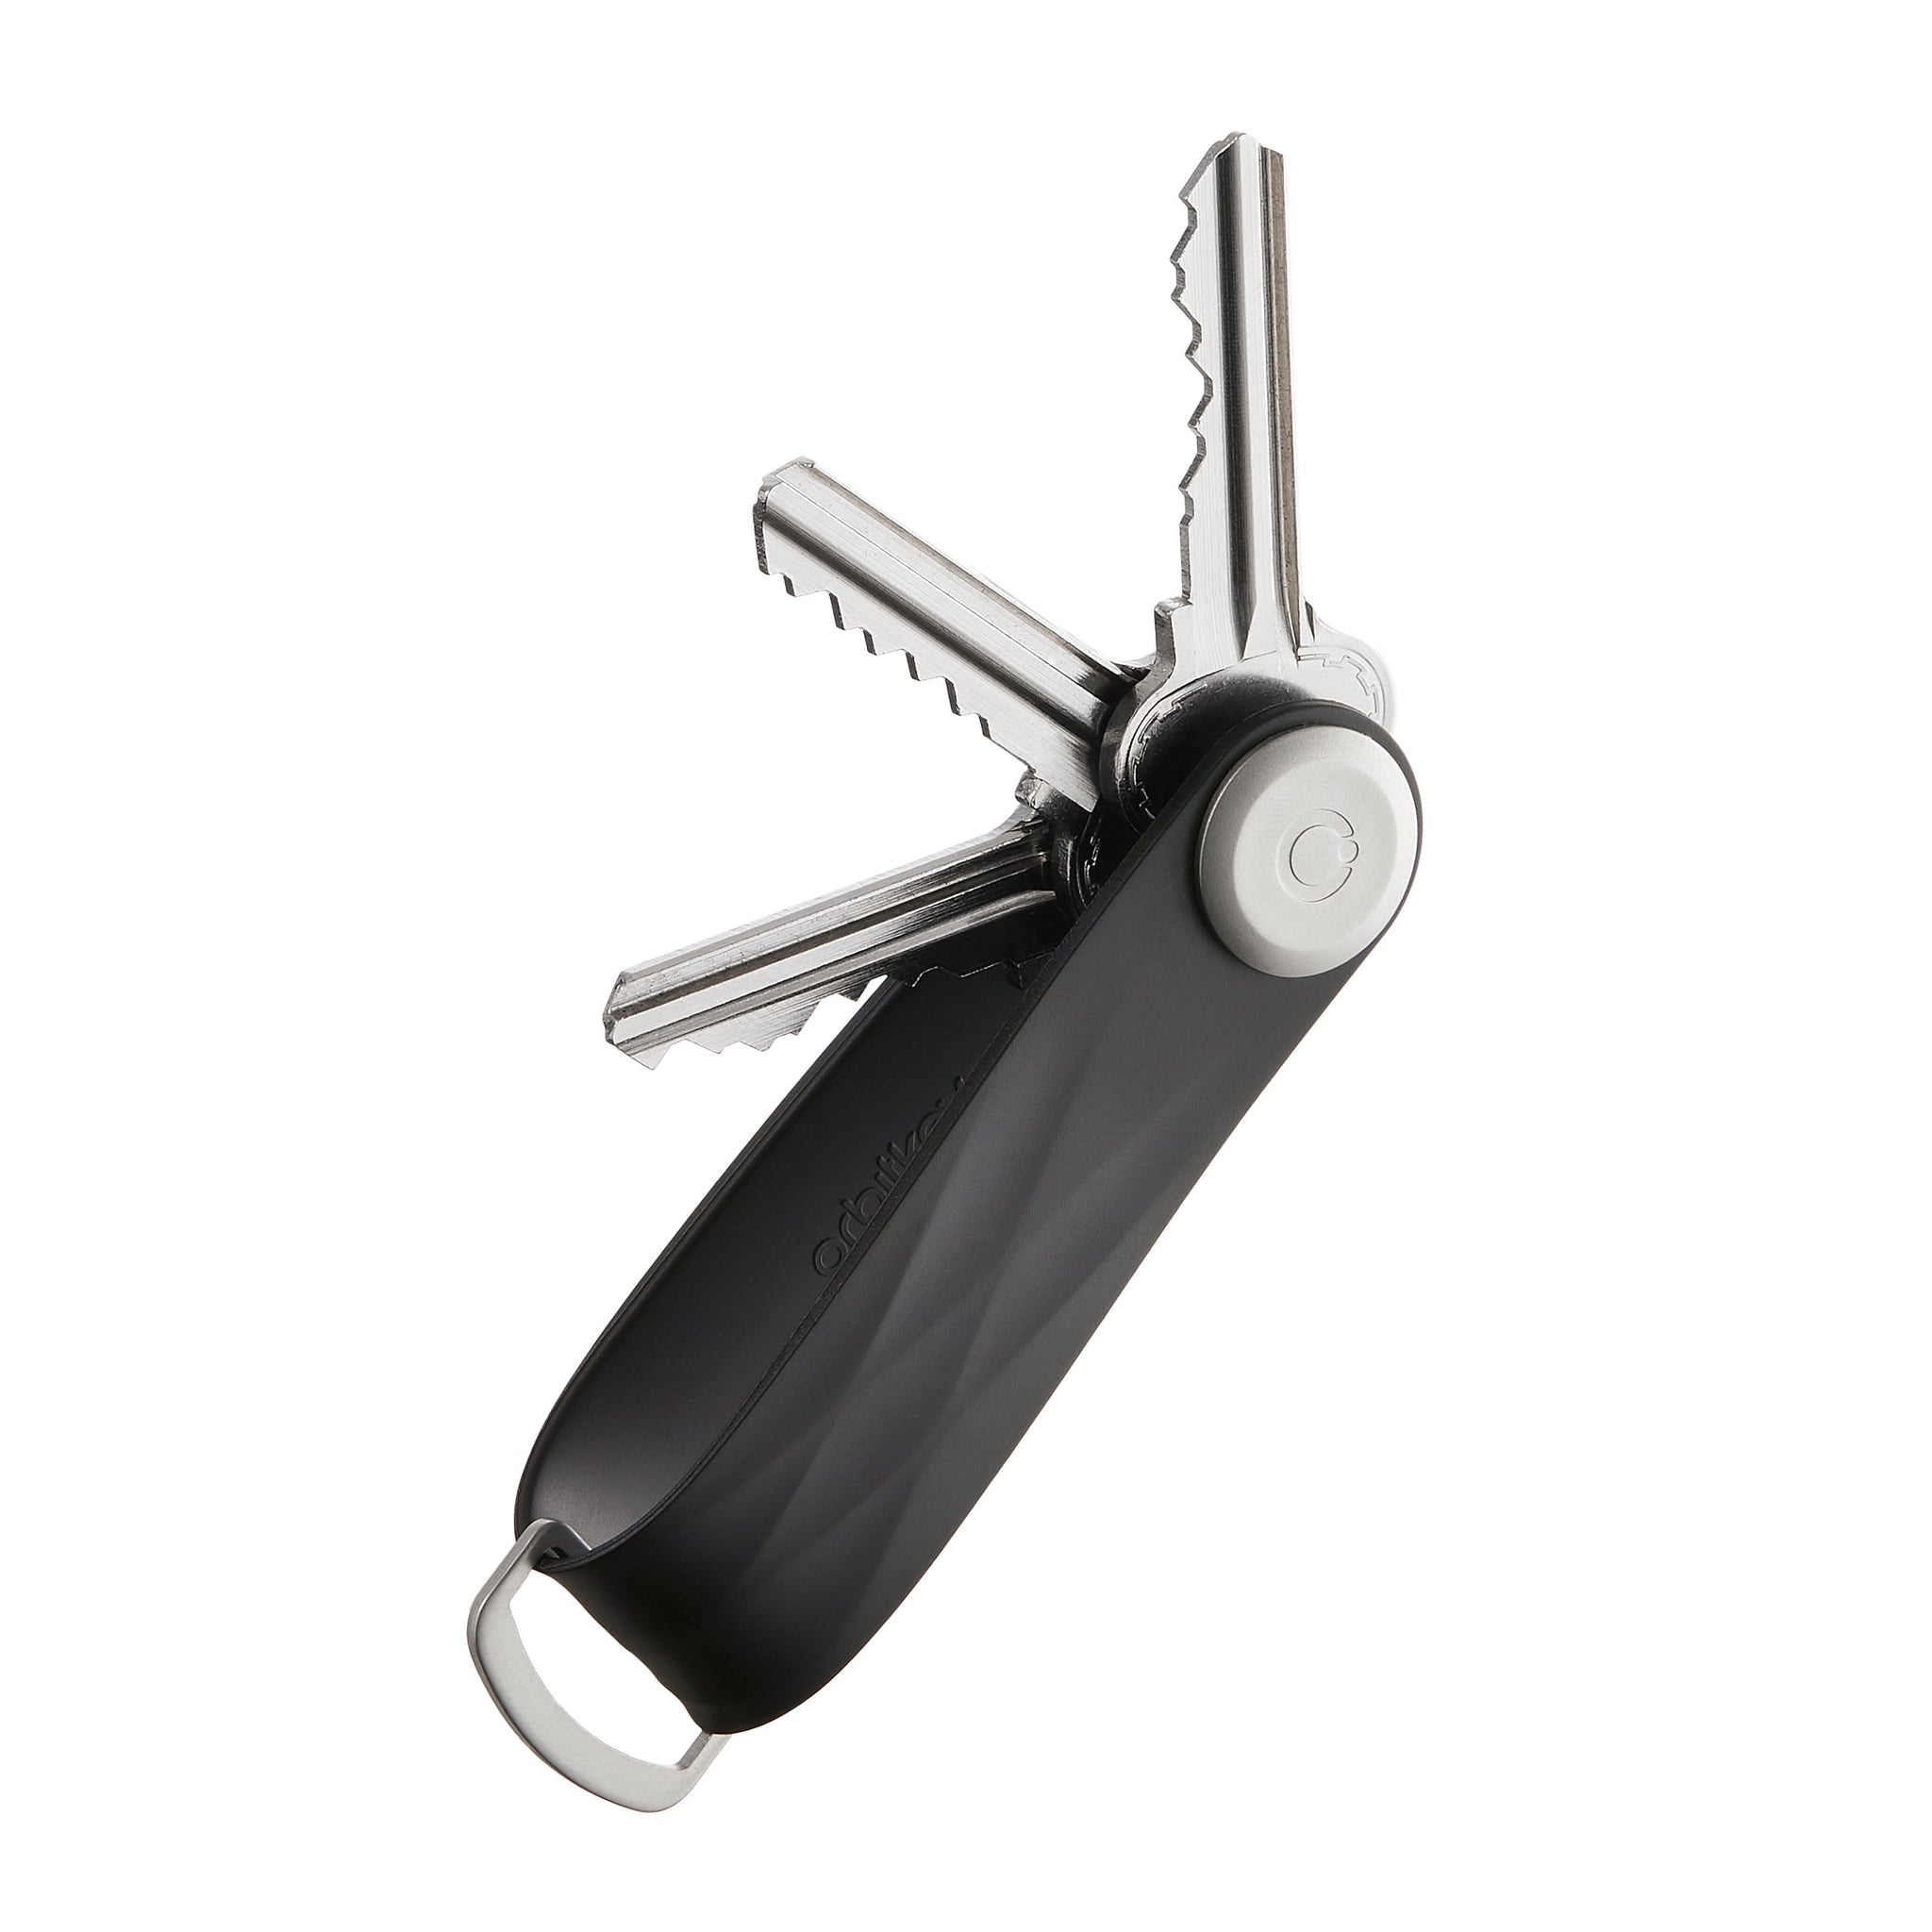 Key Organizer Orbitkey│Active Black│ACTO-2-BK│Sleutelhanger Rubber met uitgevouwen sleutels